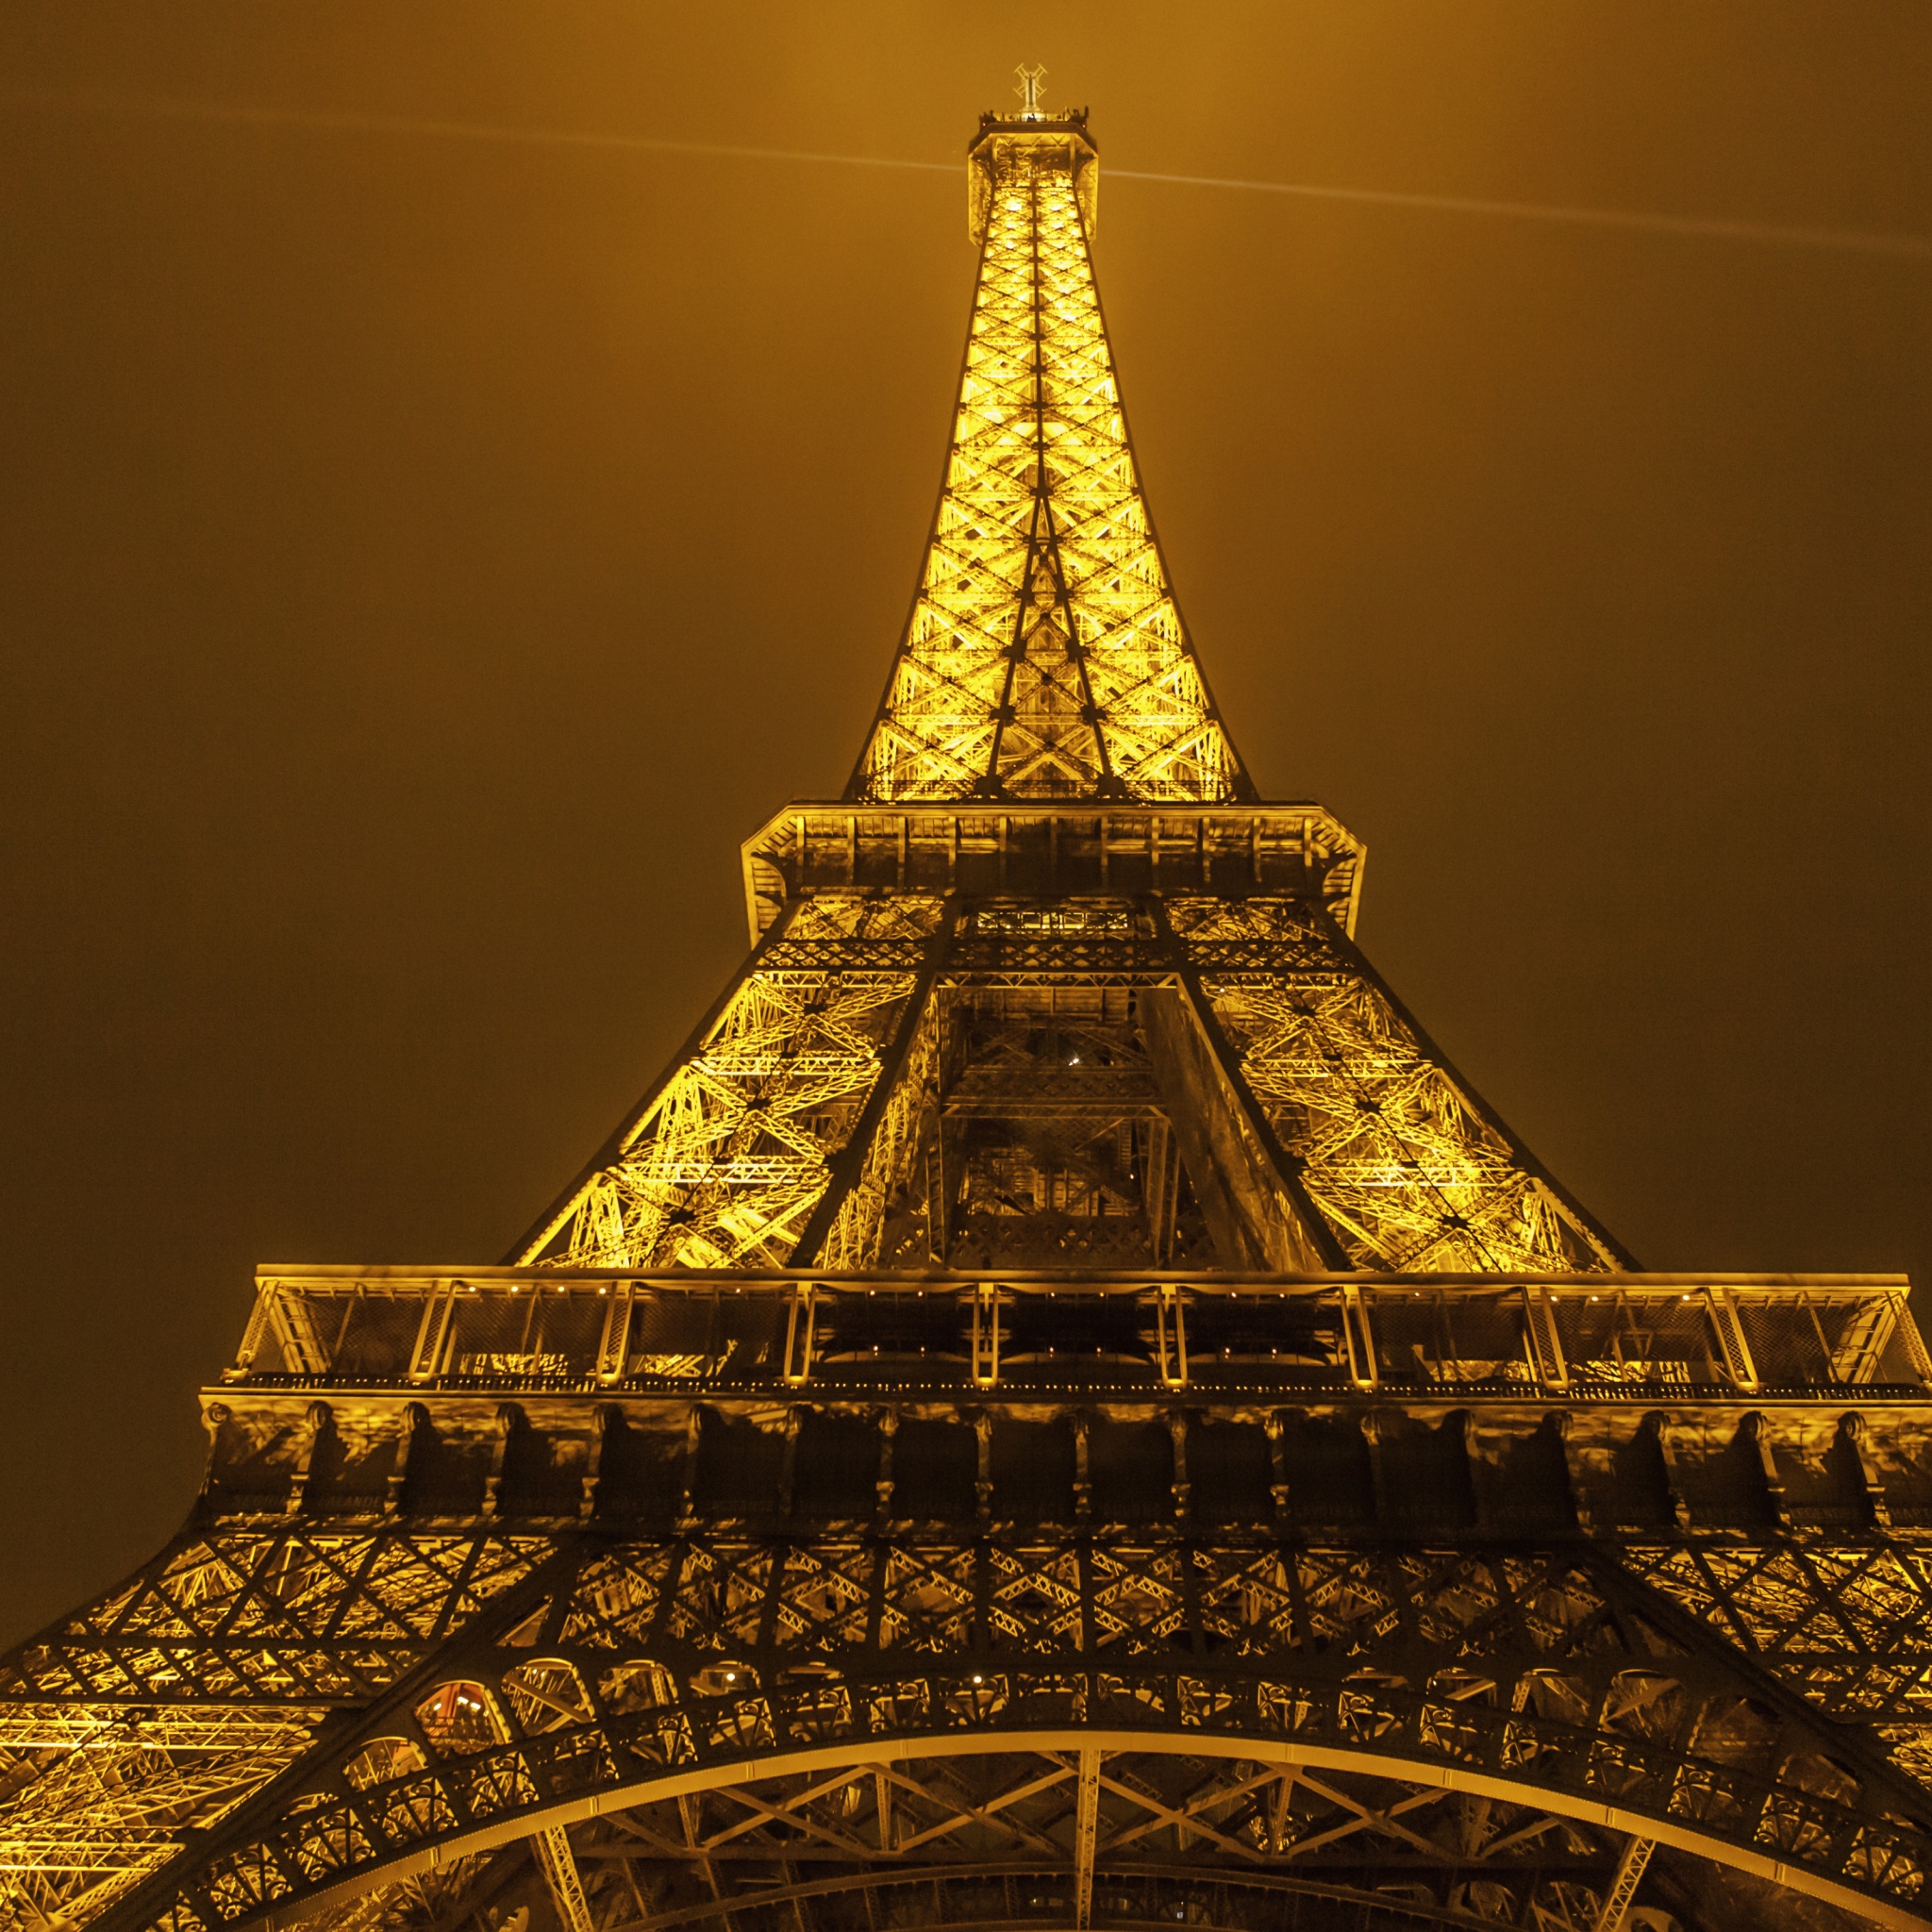 Glowing Eiffel Tower